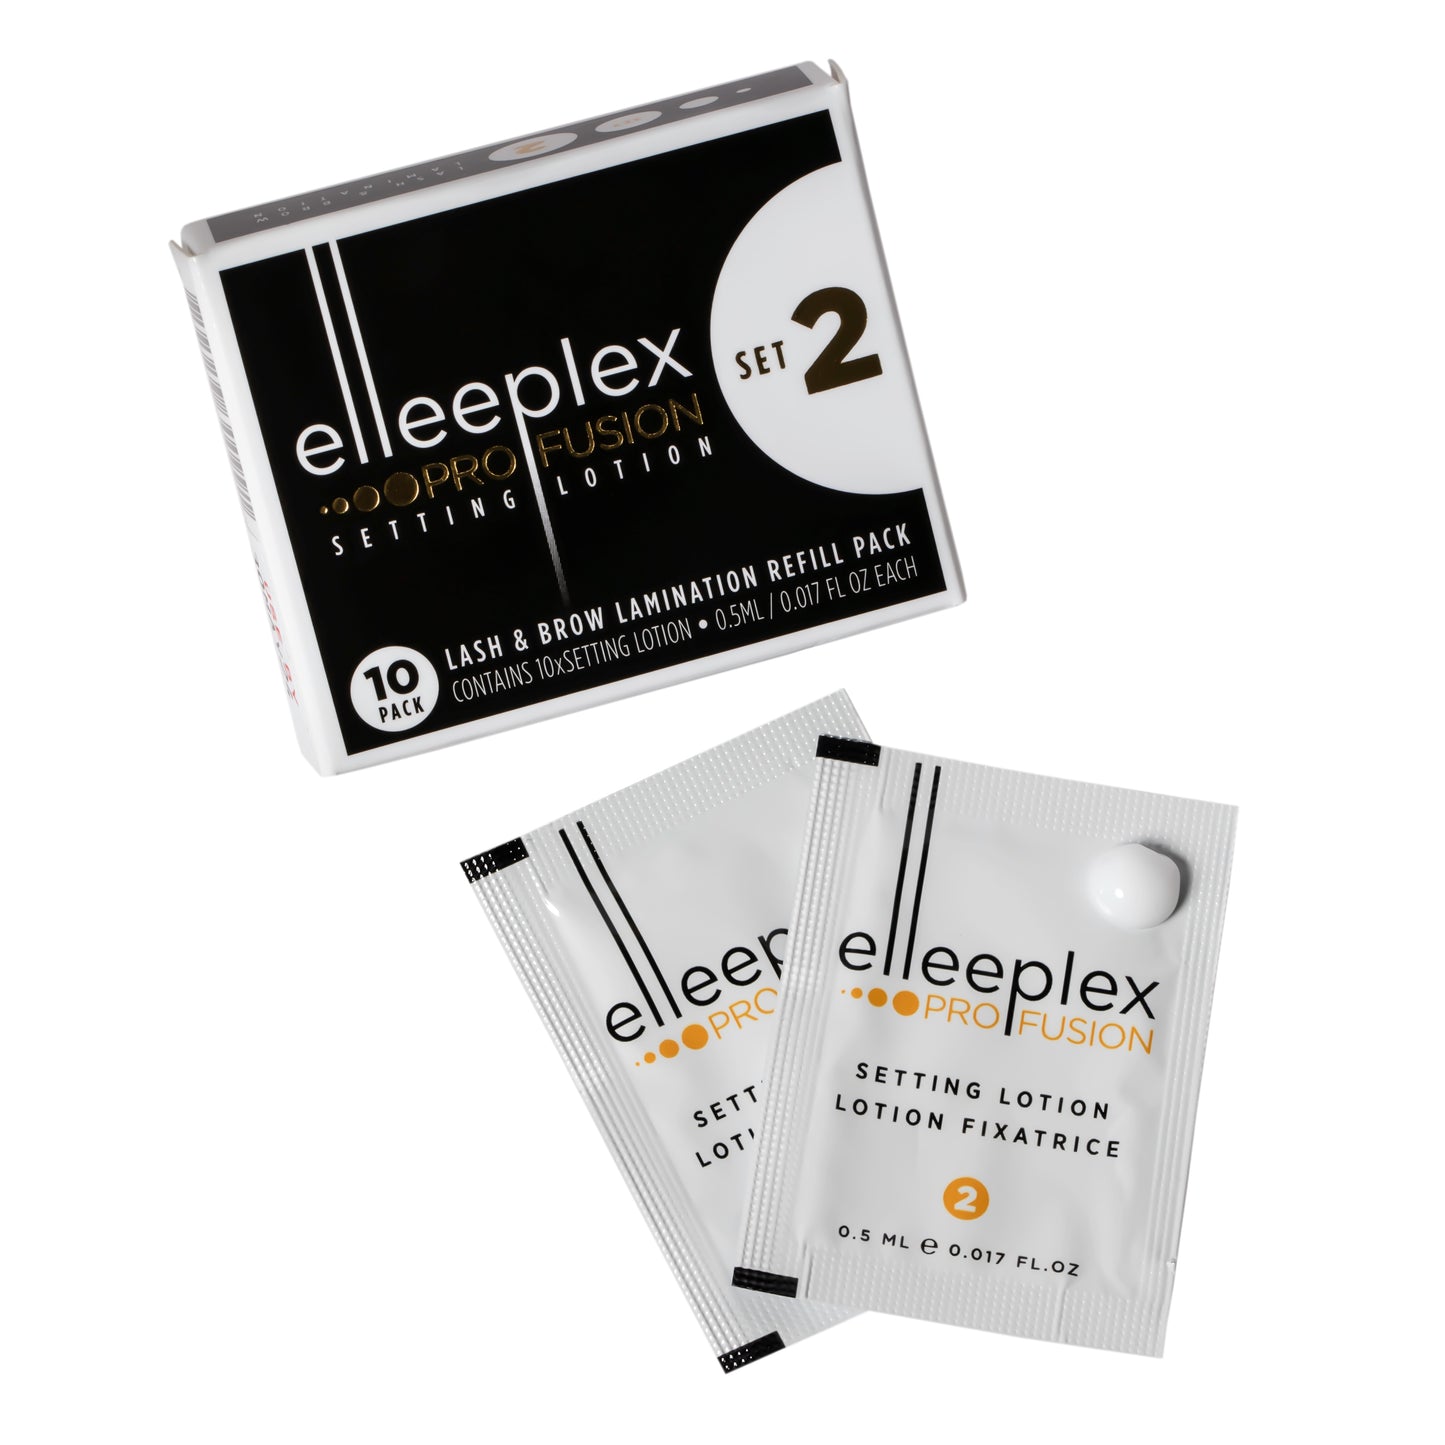 Elleeplex Profusion Lash lift & Brow lamination SET - Step 2 ONLY (10 pack)